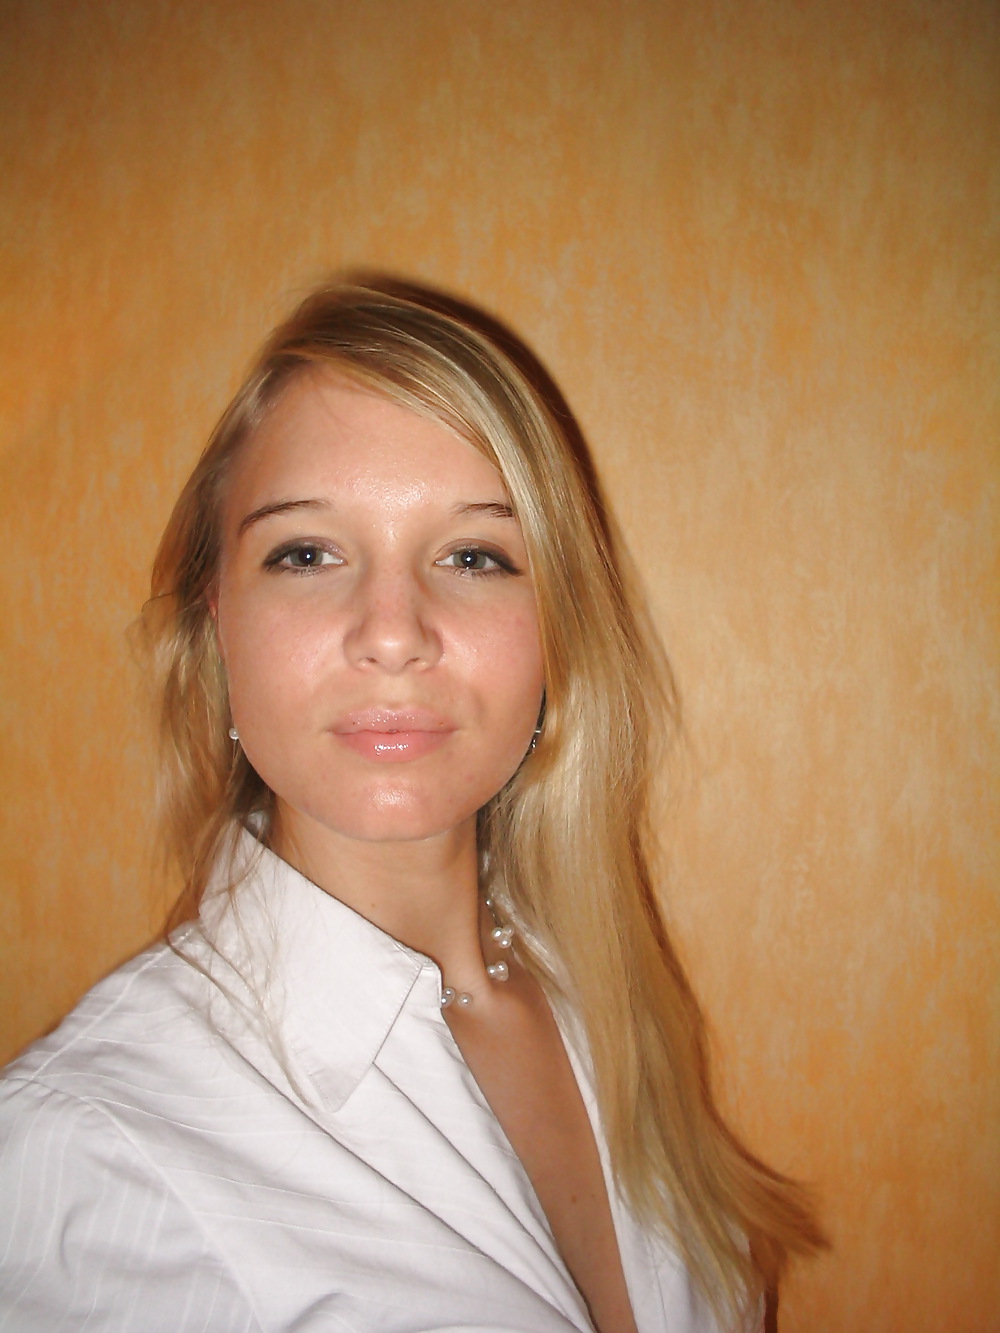 Sexy Blonde German Teen Poses In Lingerie #24813739